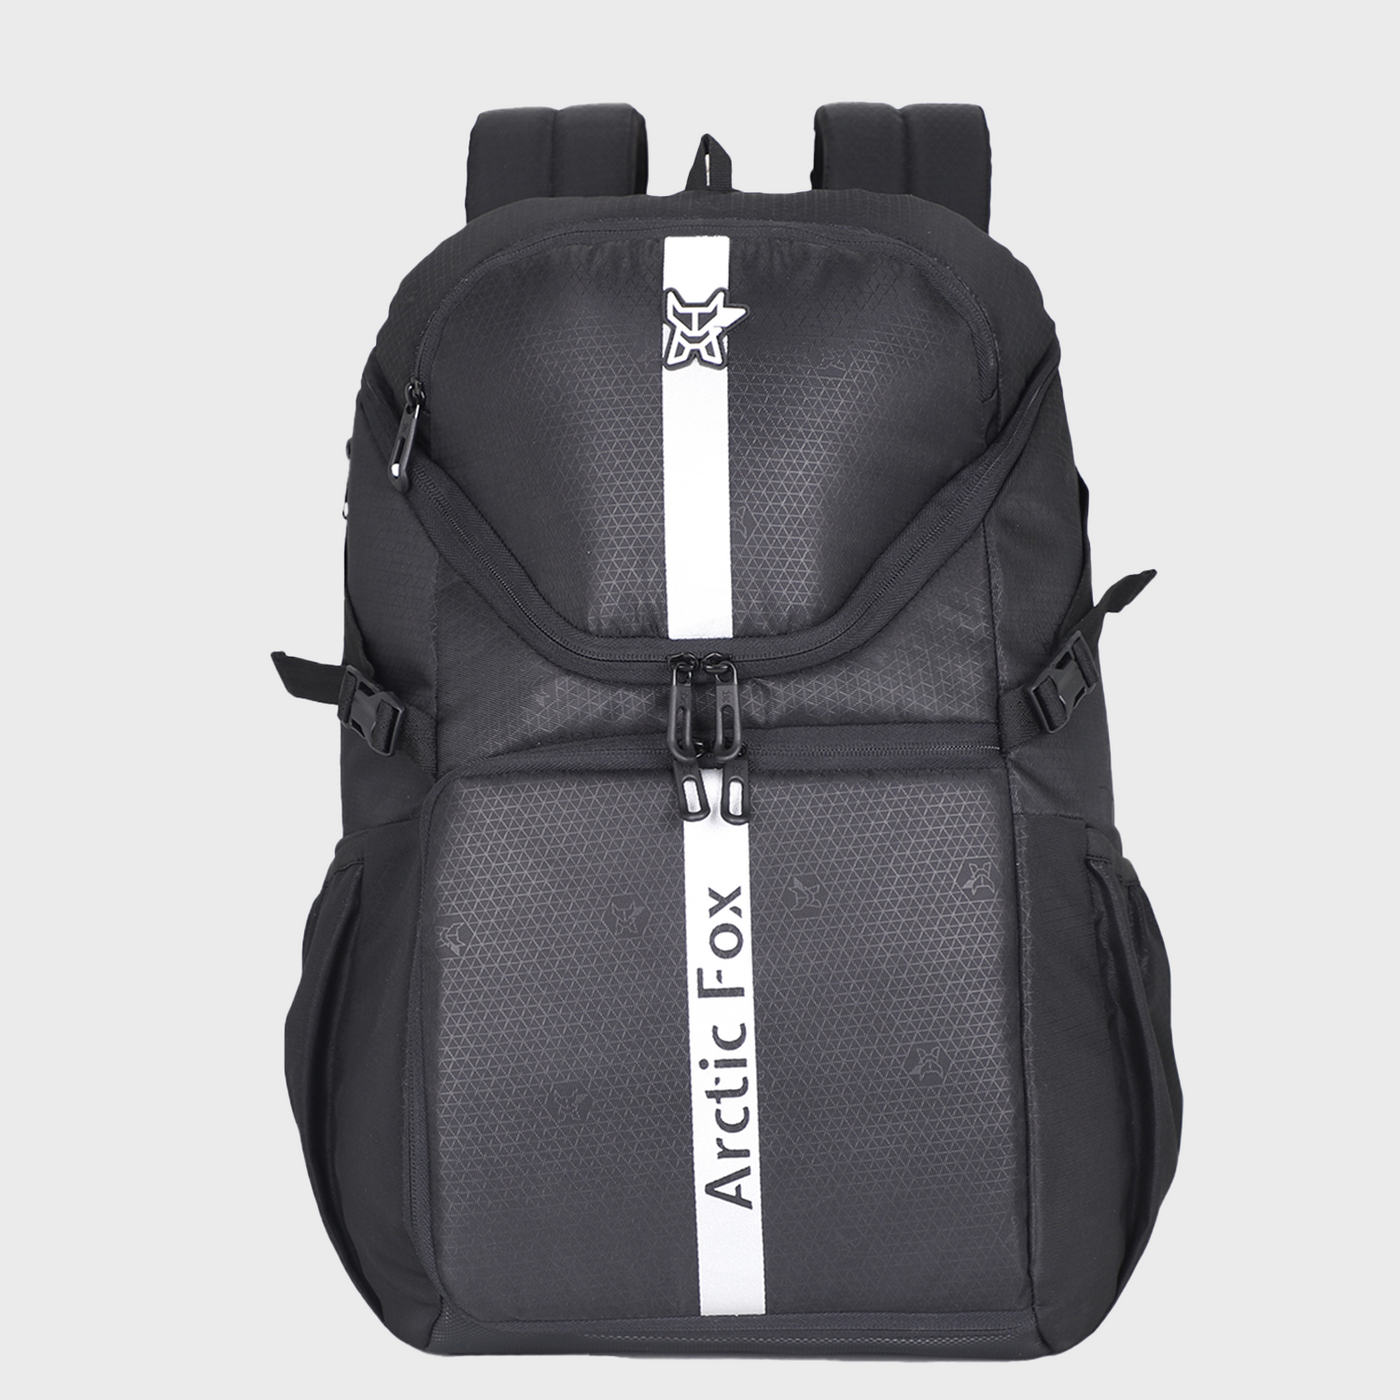 Arctic Fox Flash Jet Black Professional Dslr Camera Bag and Camera Backpack